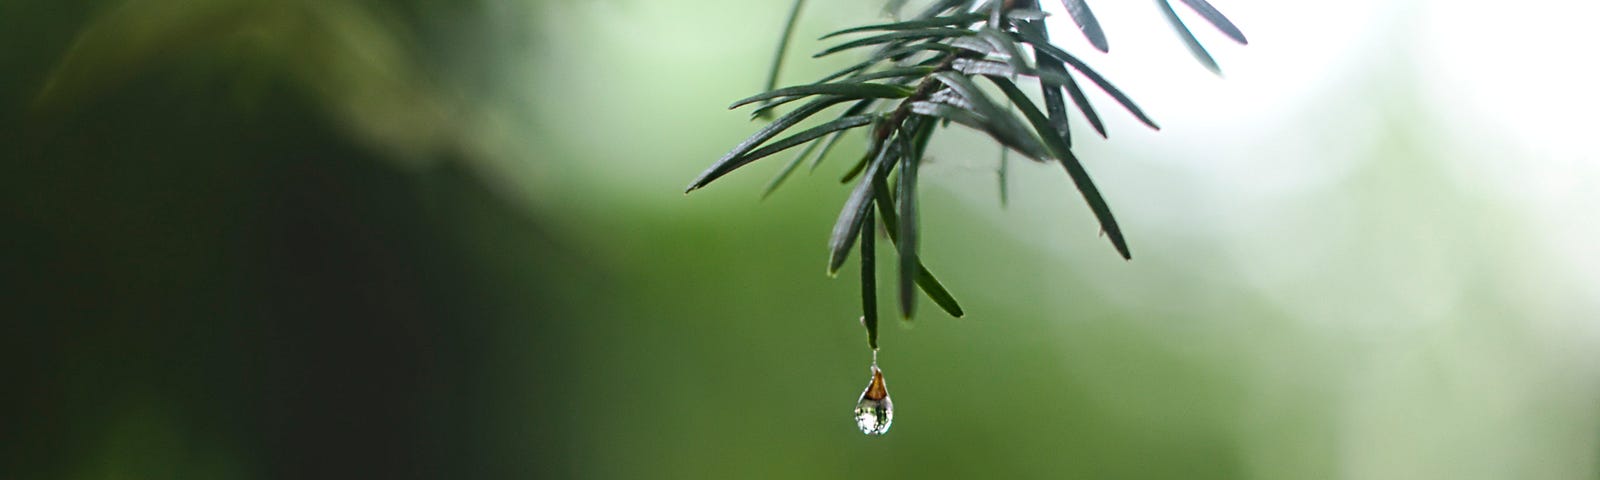 Drop of Rain Joys, peace and music